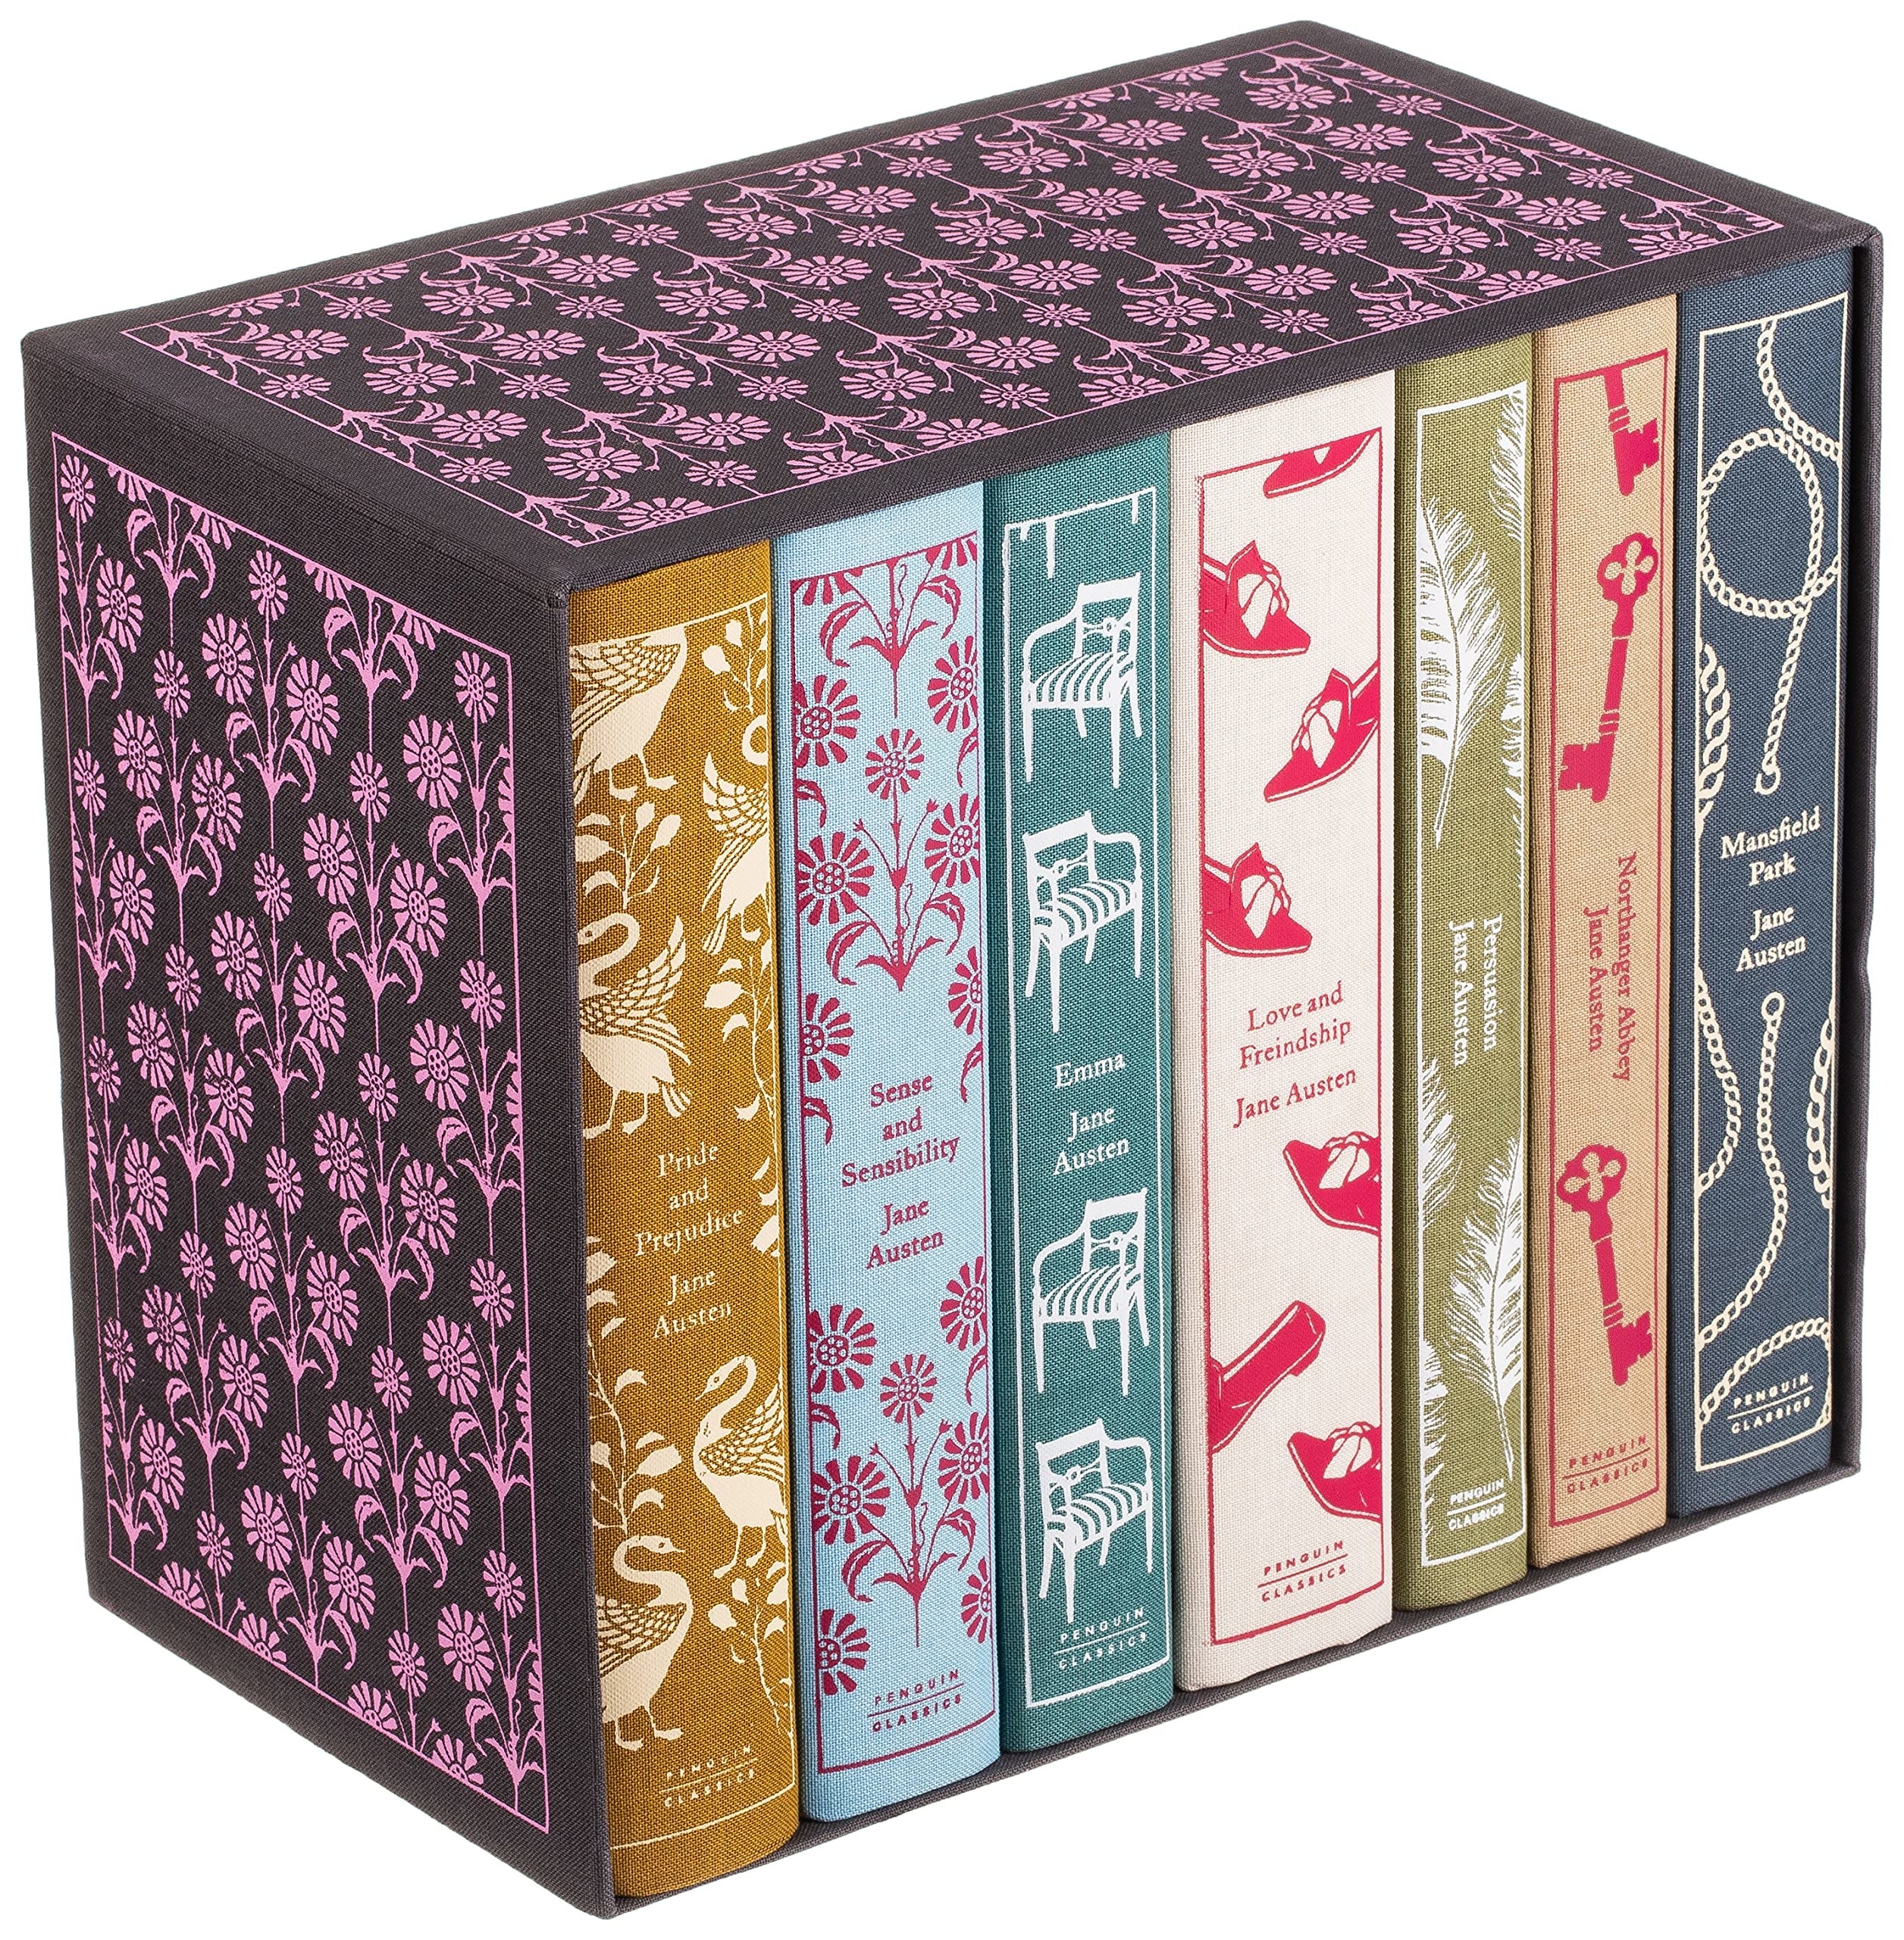 Jane Austen box set by Penguin Classics